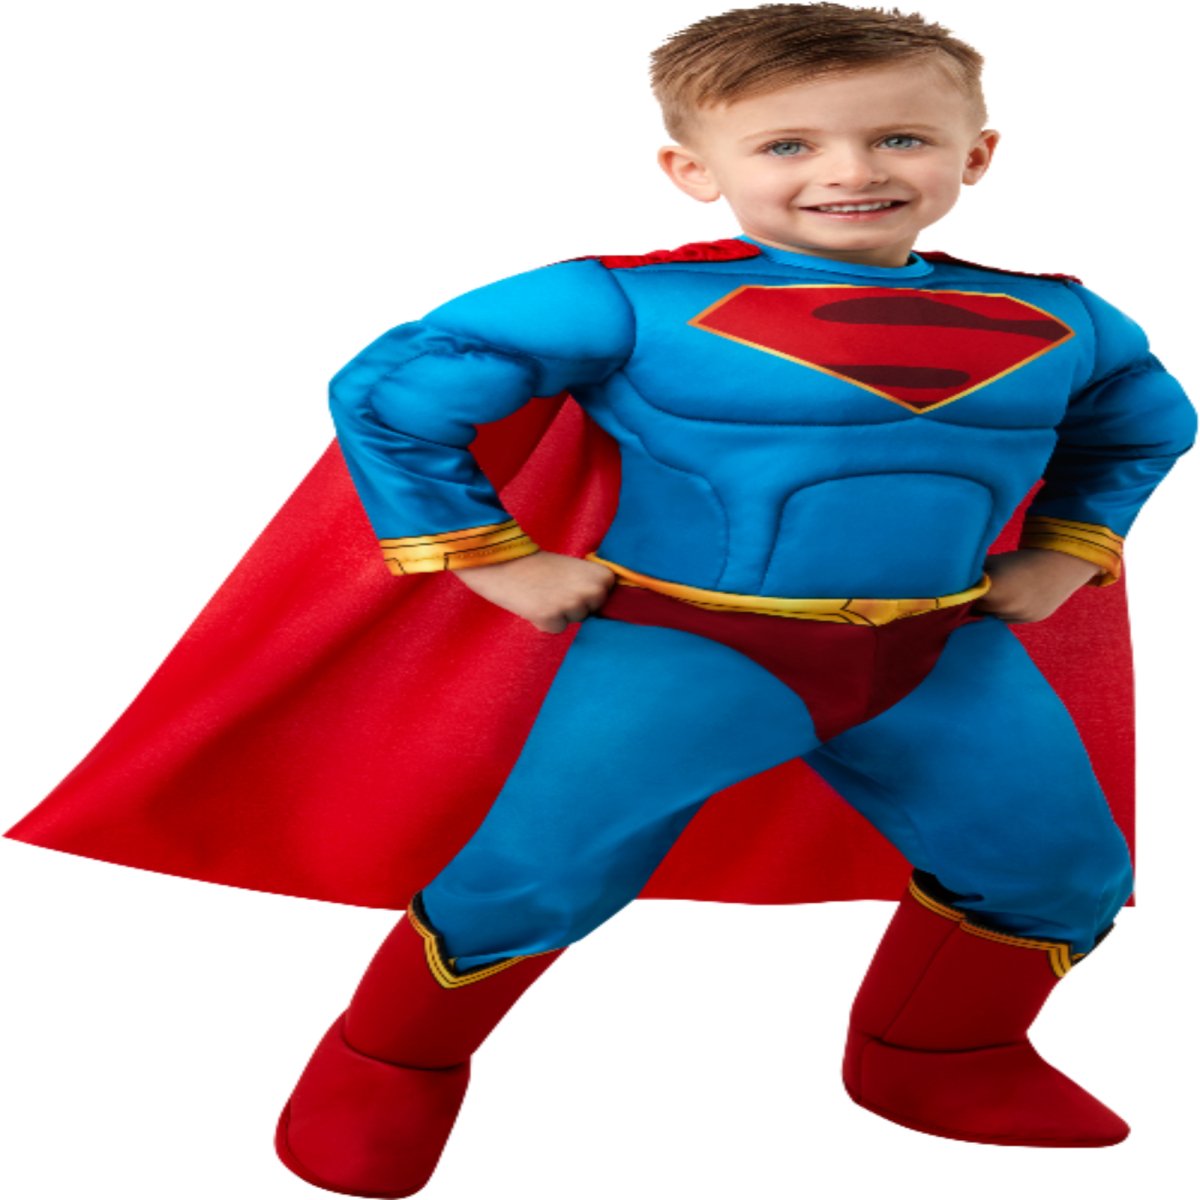 Superman Toddler Costume - worldclasscostumes